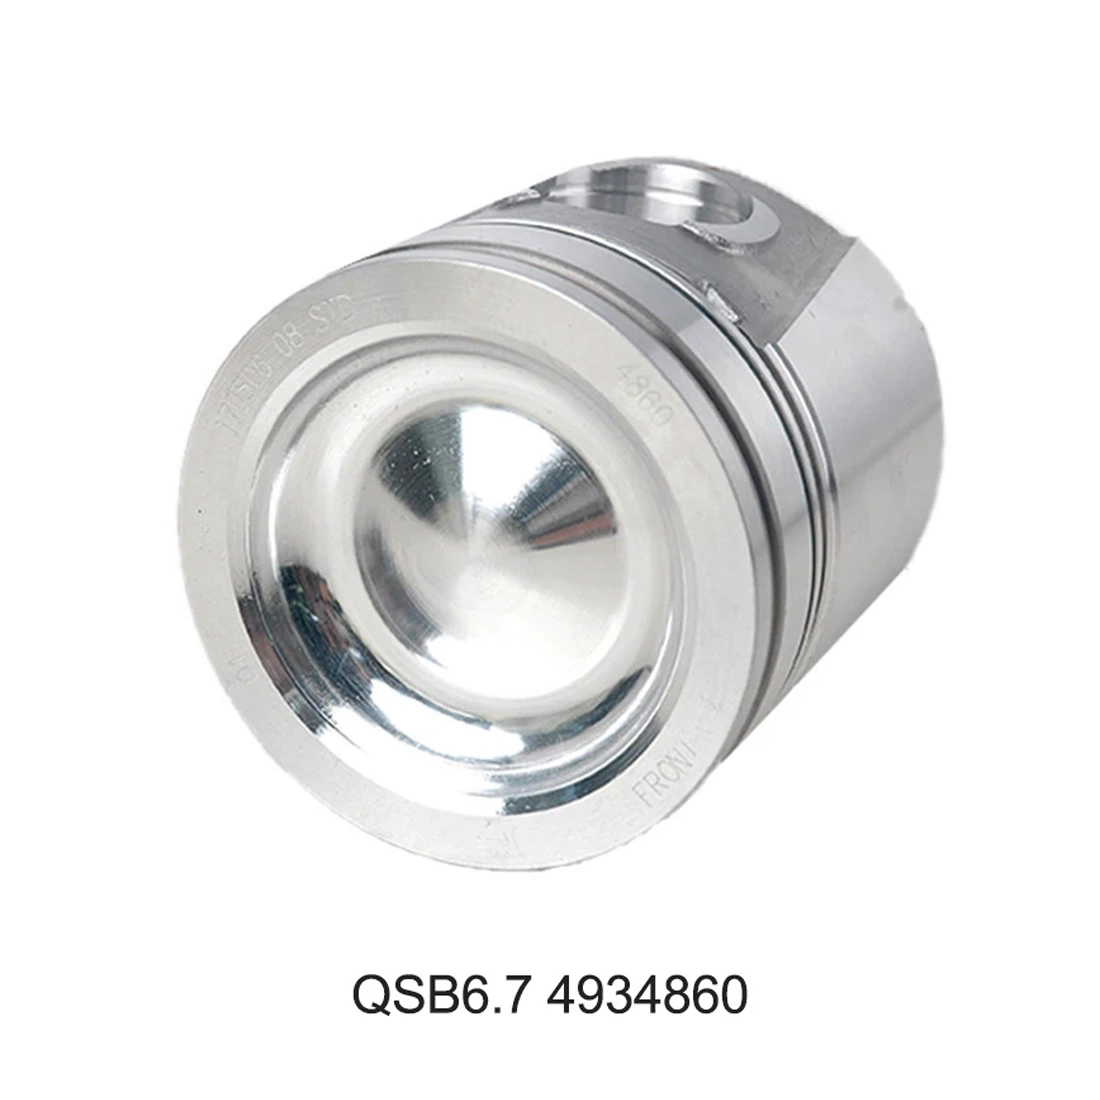 Qsb6.7 Diesel Engine Hydraulic Pump Adapter 3999966 Spare Parts for Cummins